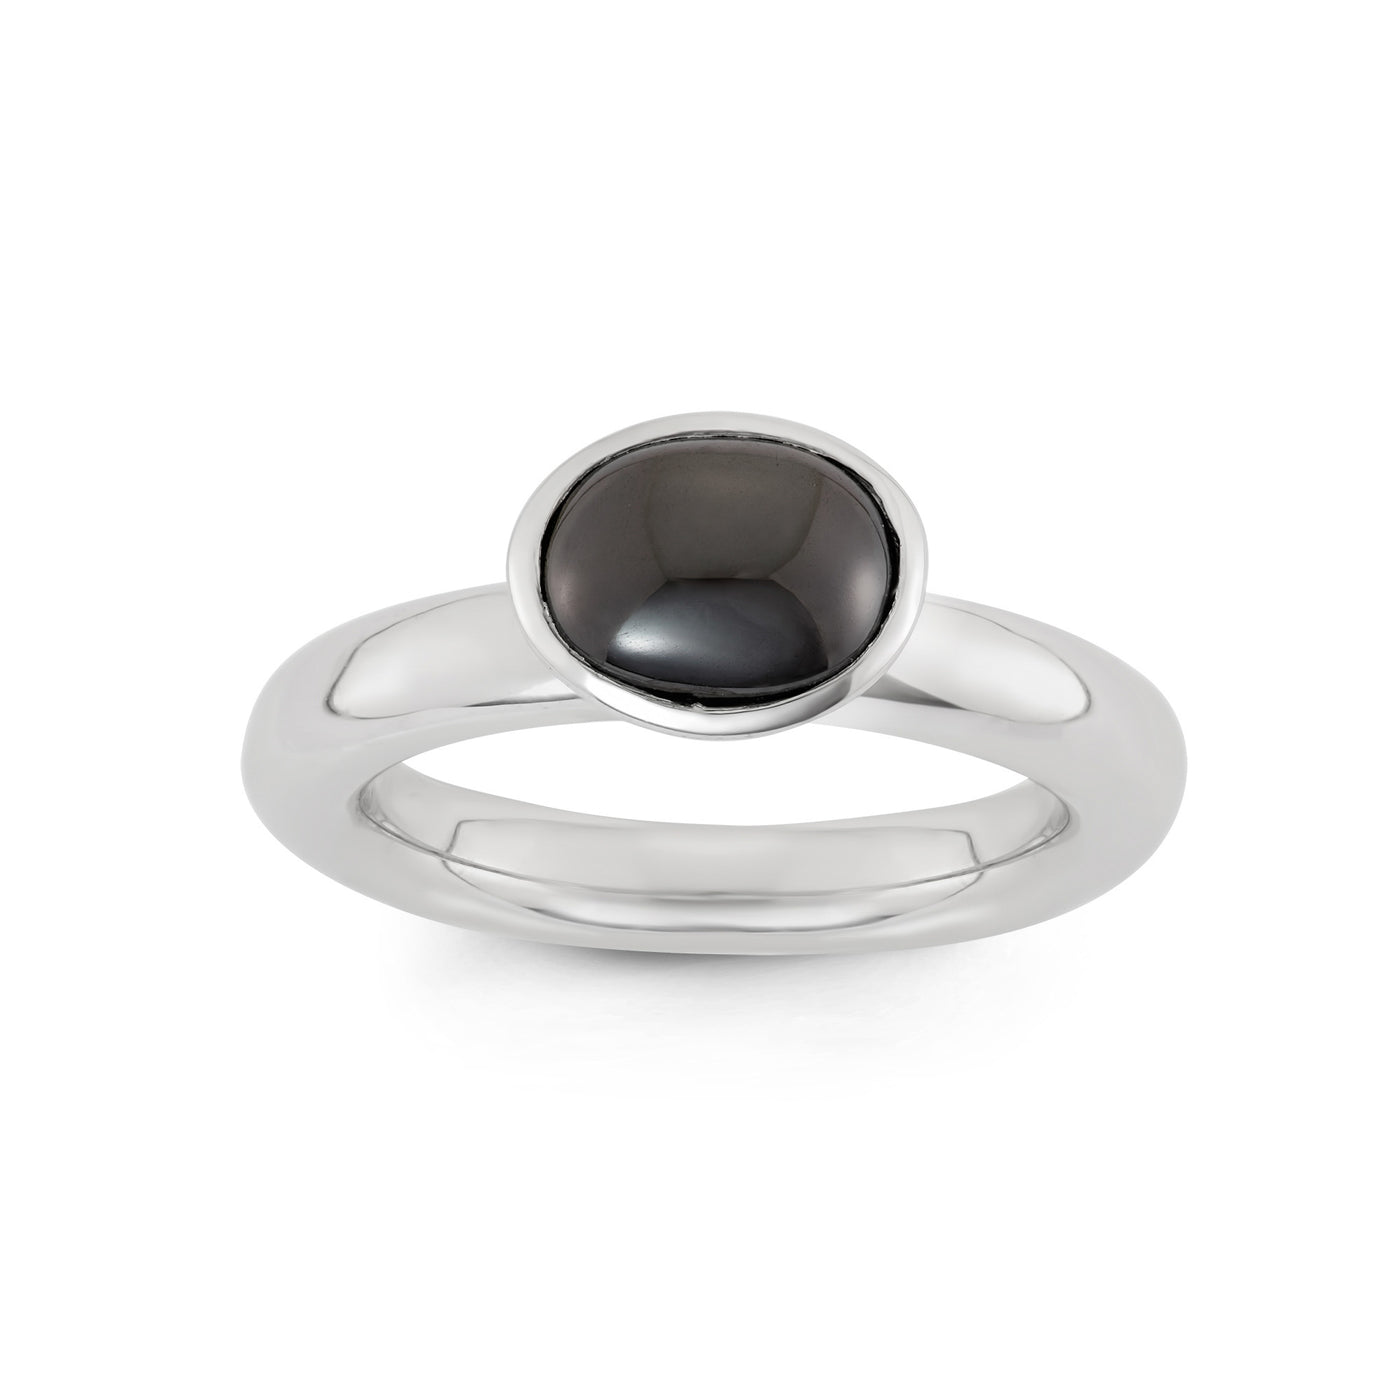 Rebecca Sloane Silver Ring With Black Oval CZ Center Stone